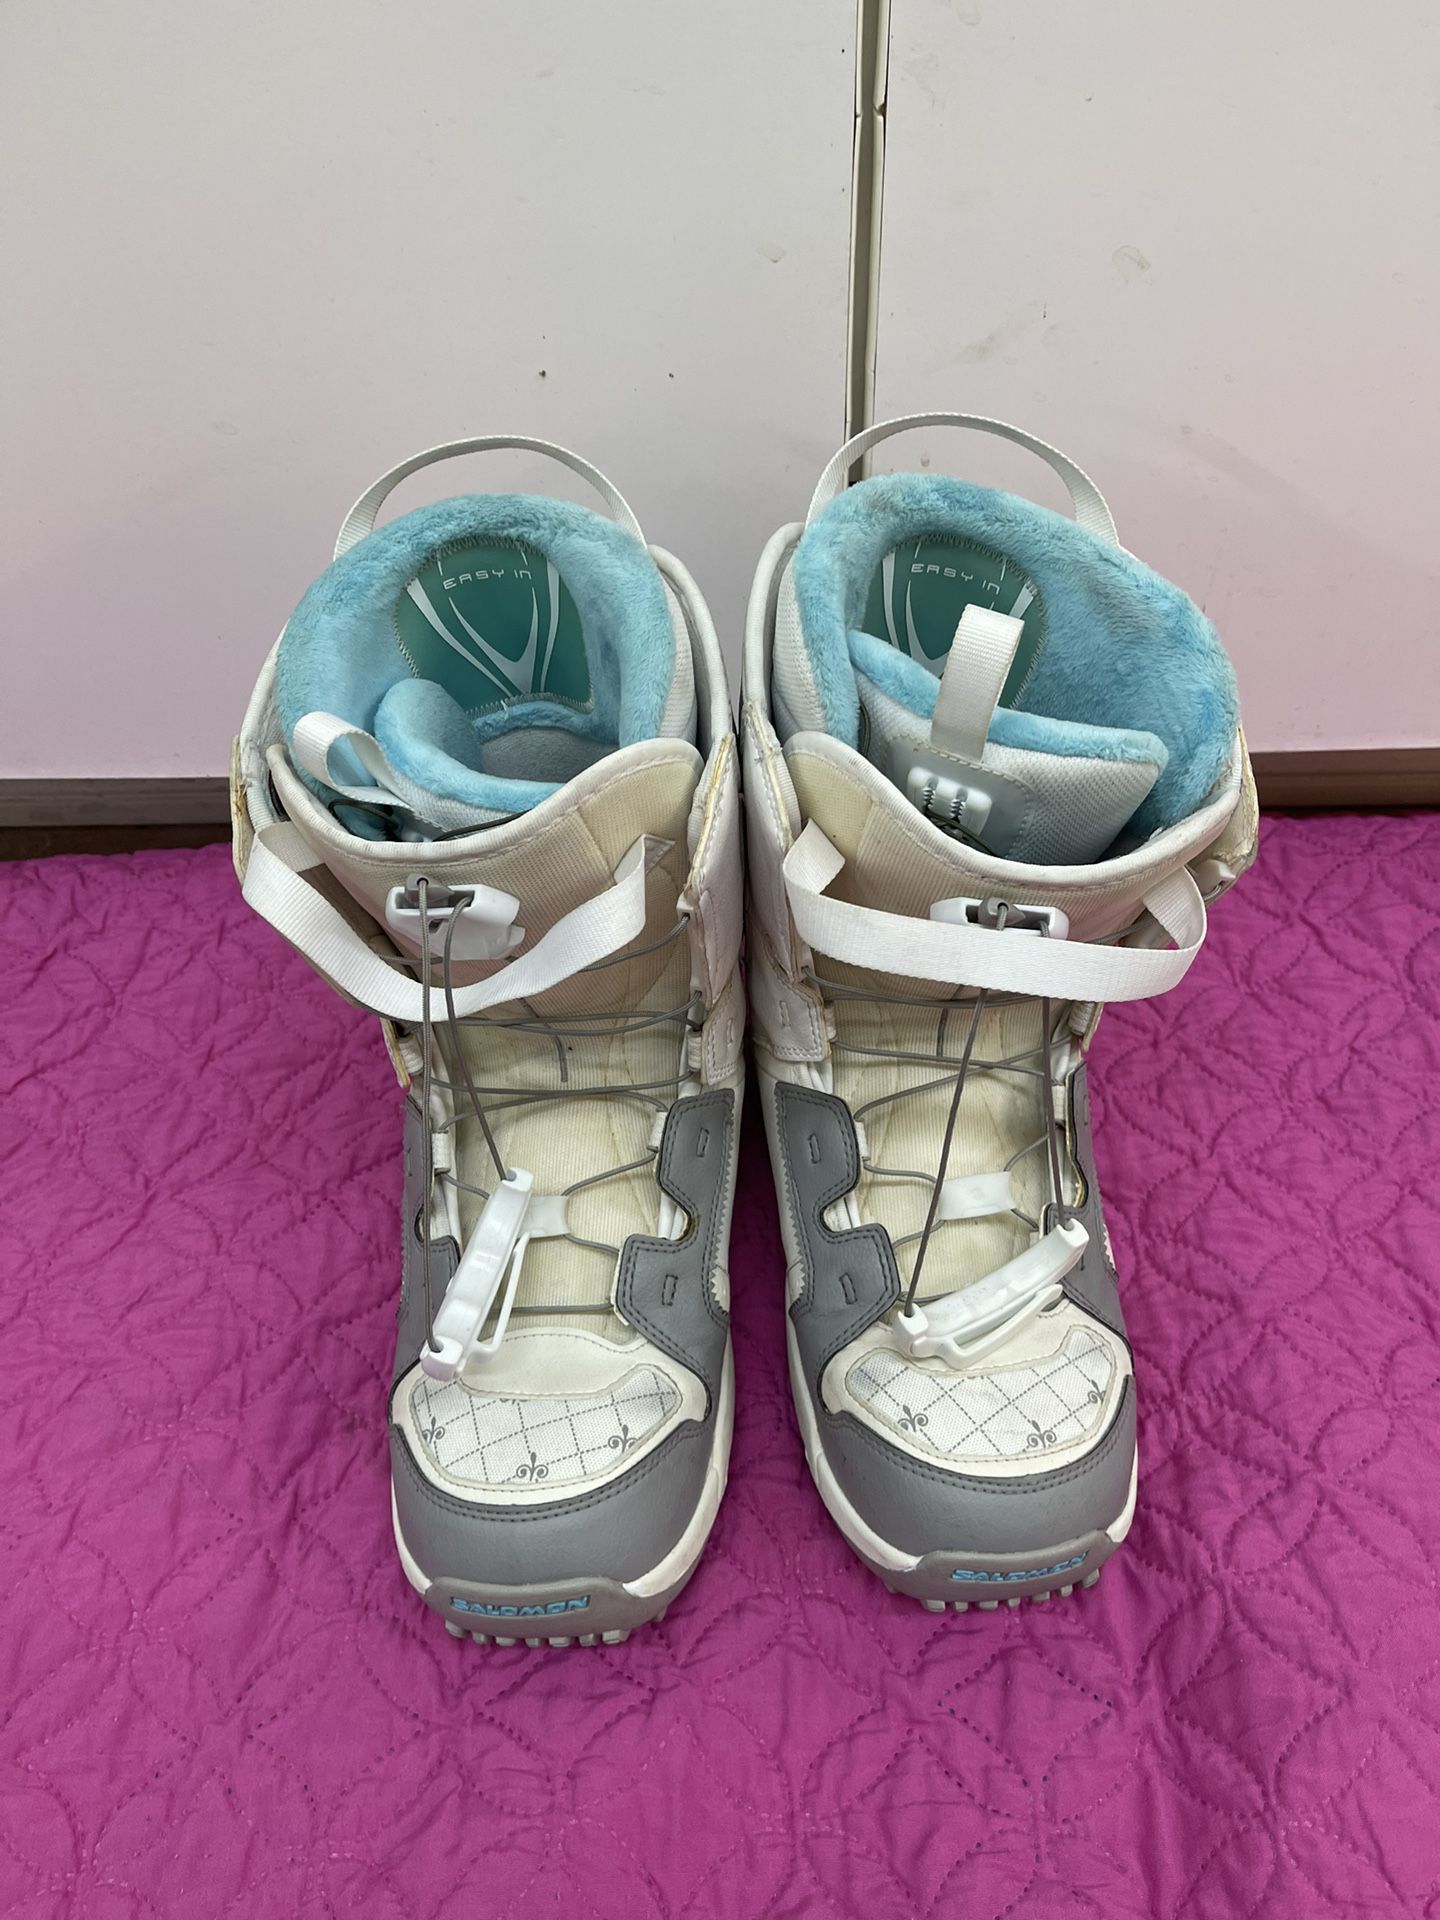 Salomon Women’s Size 10 White Snowboard Boots